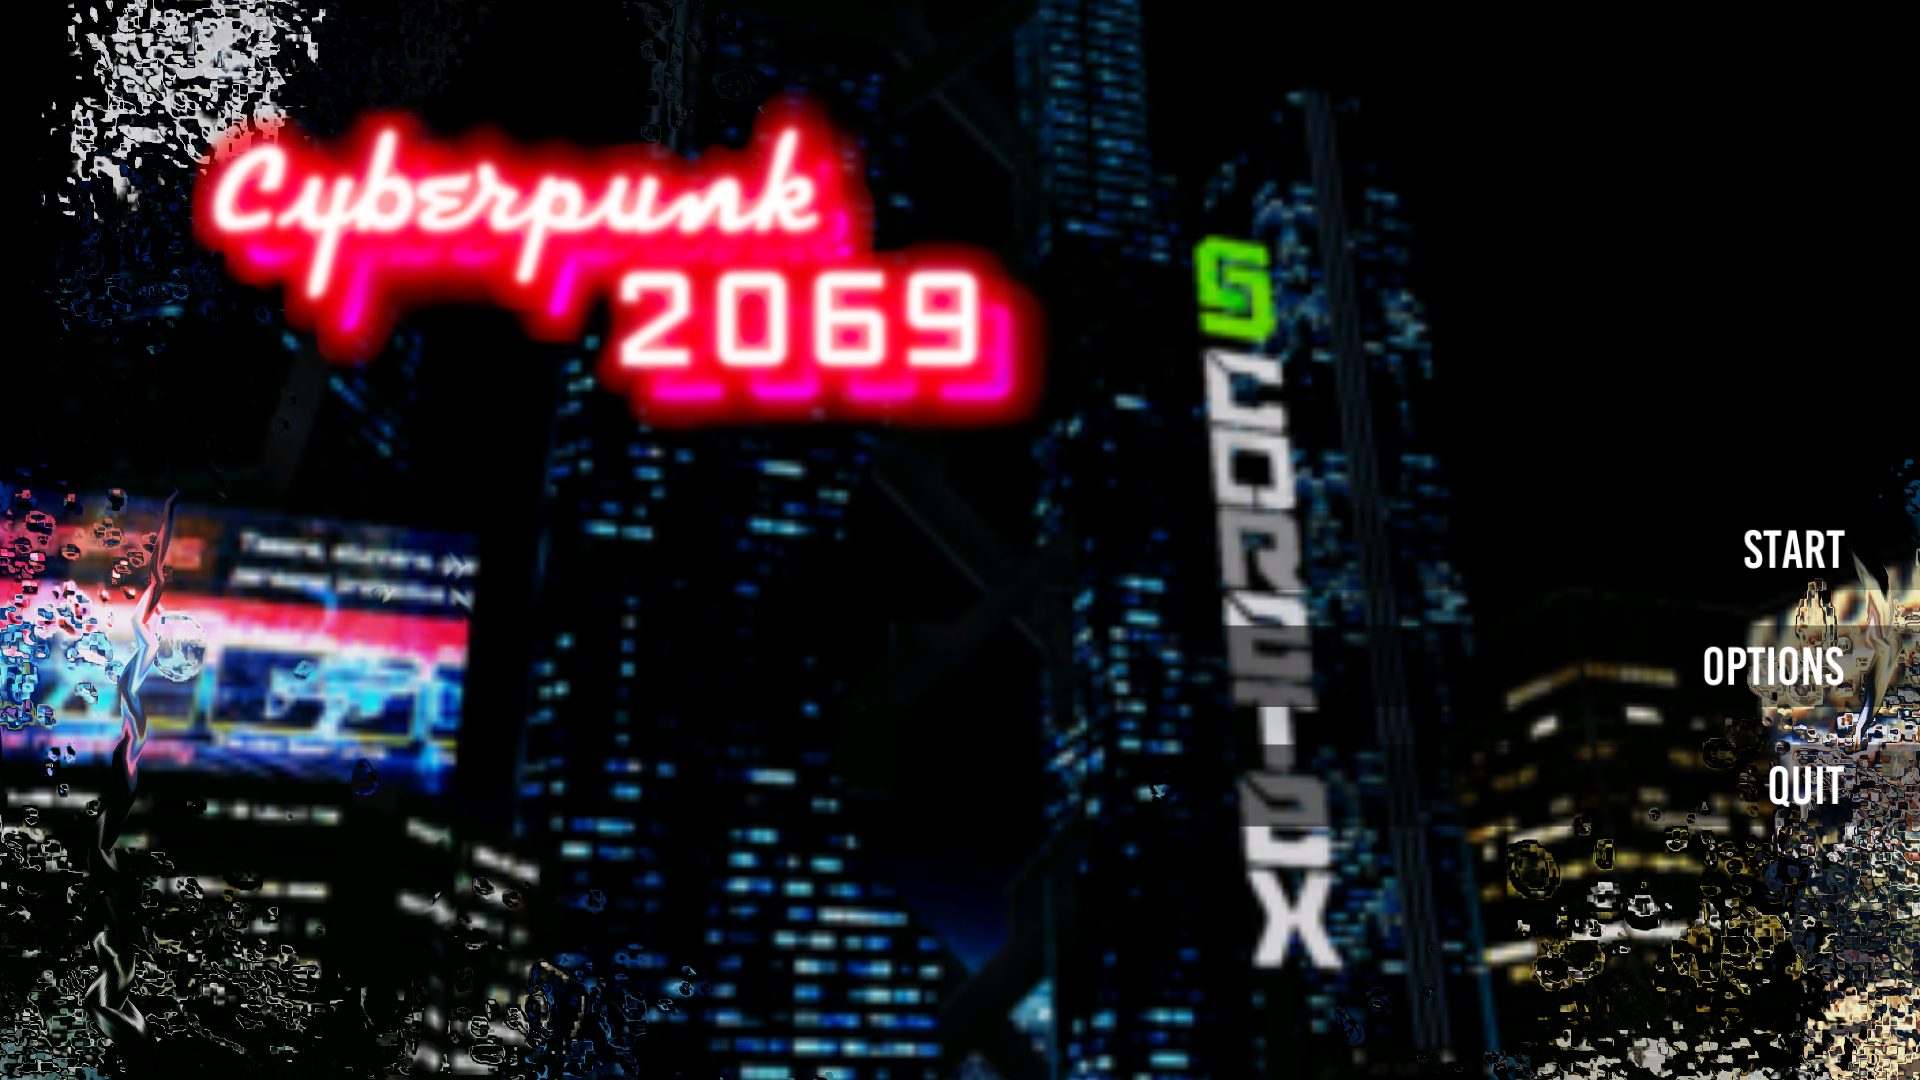 Cyberpunk 2069 download фото 105